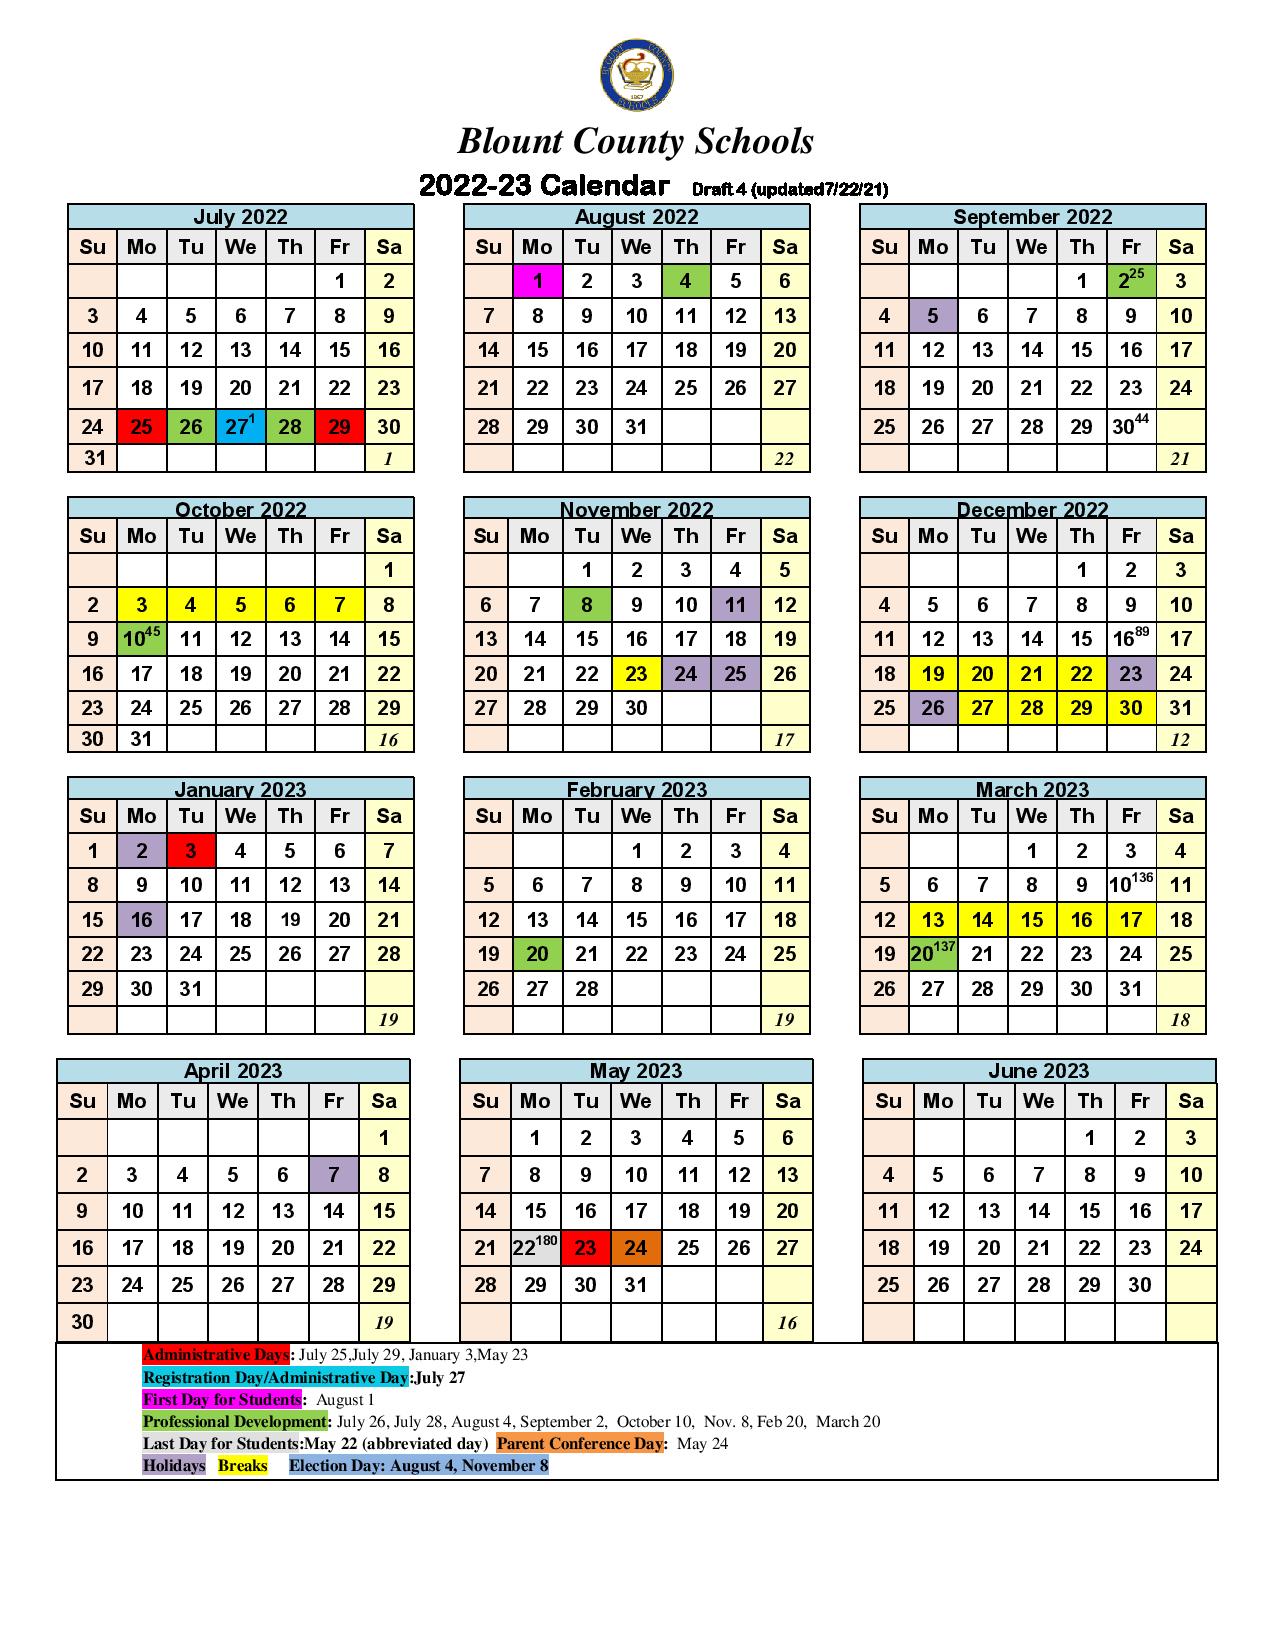 Blount County Schools Calendar 2022 2023 in PDF Format